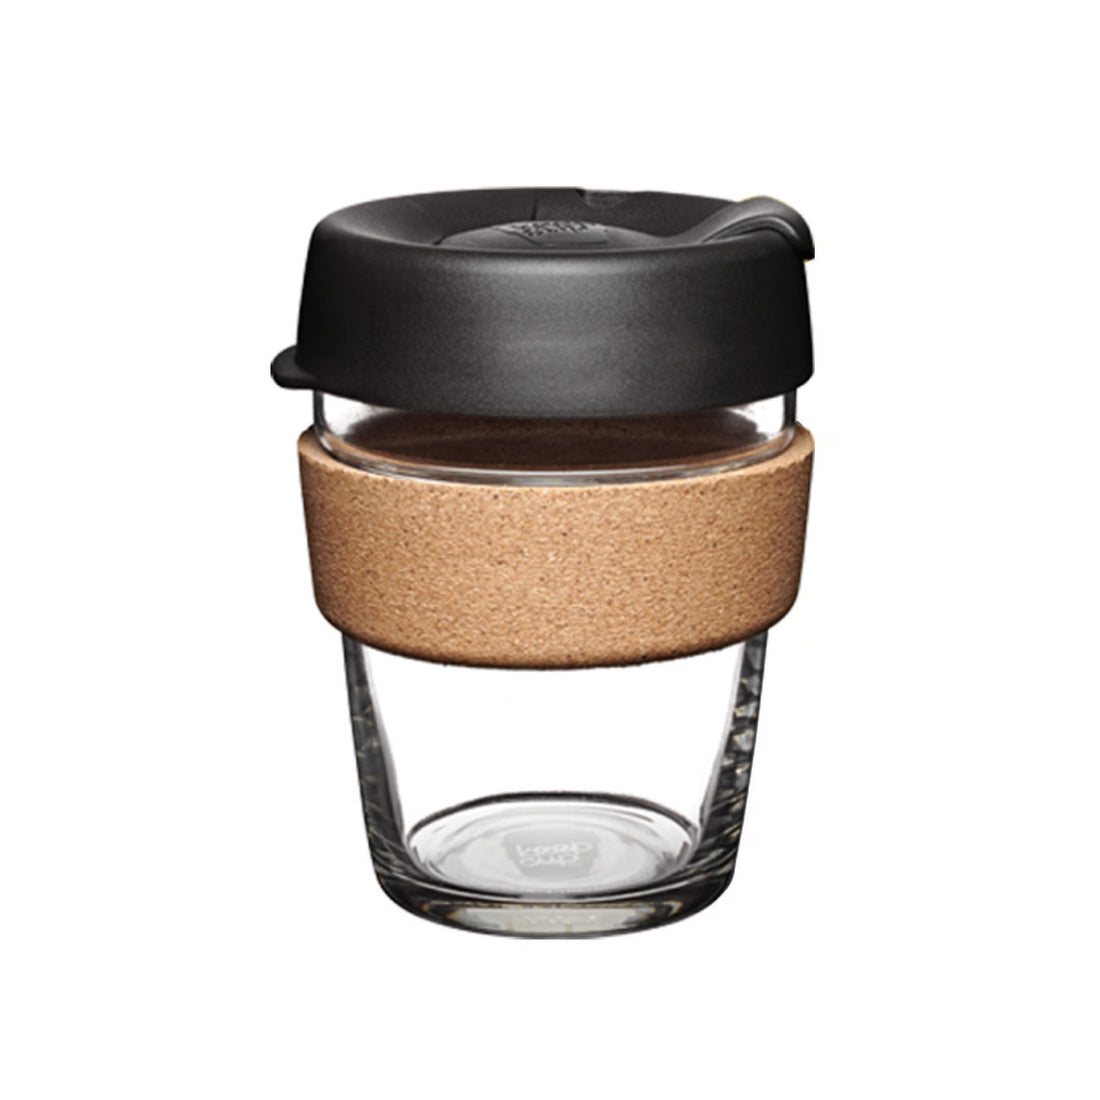 KeepCup Brew Cork Glass Reusable Coffee Cup 12oz - Black